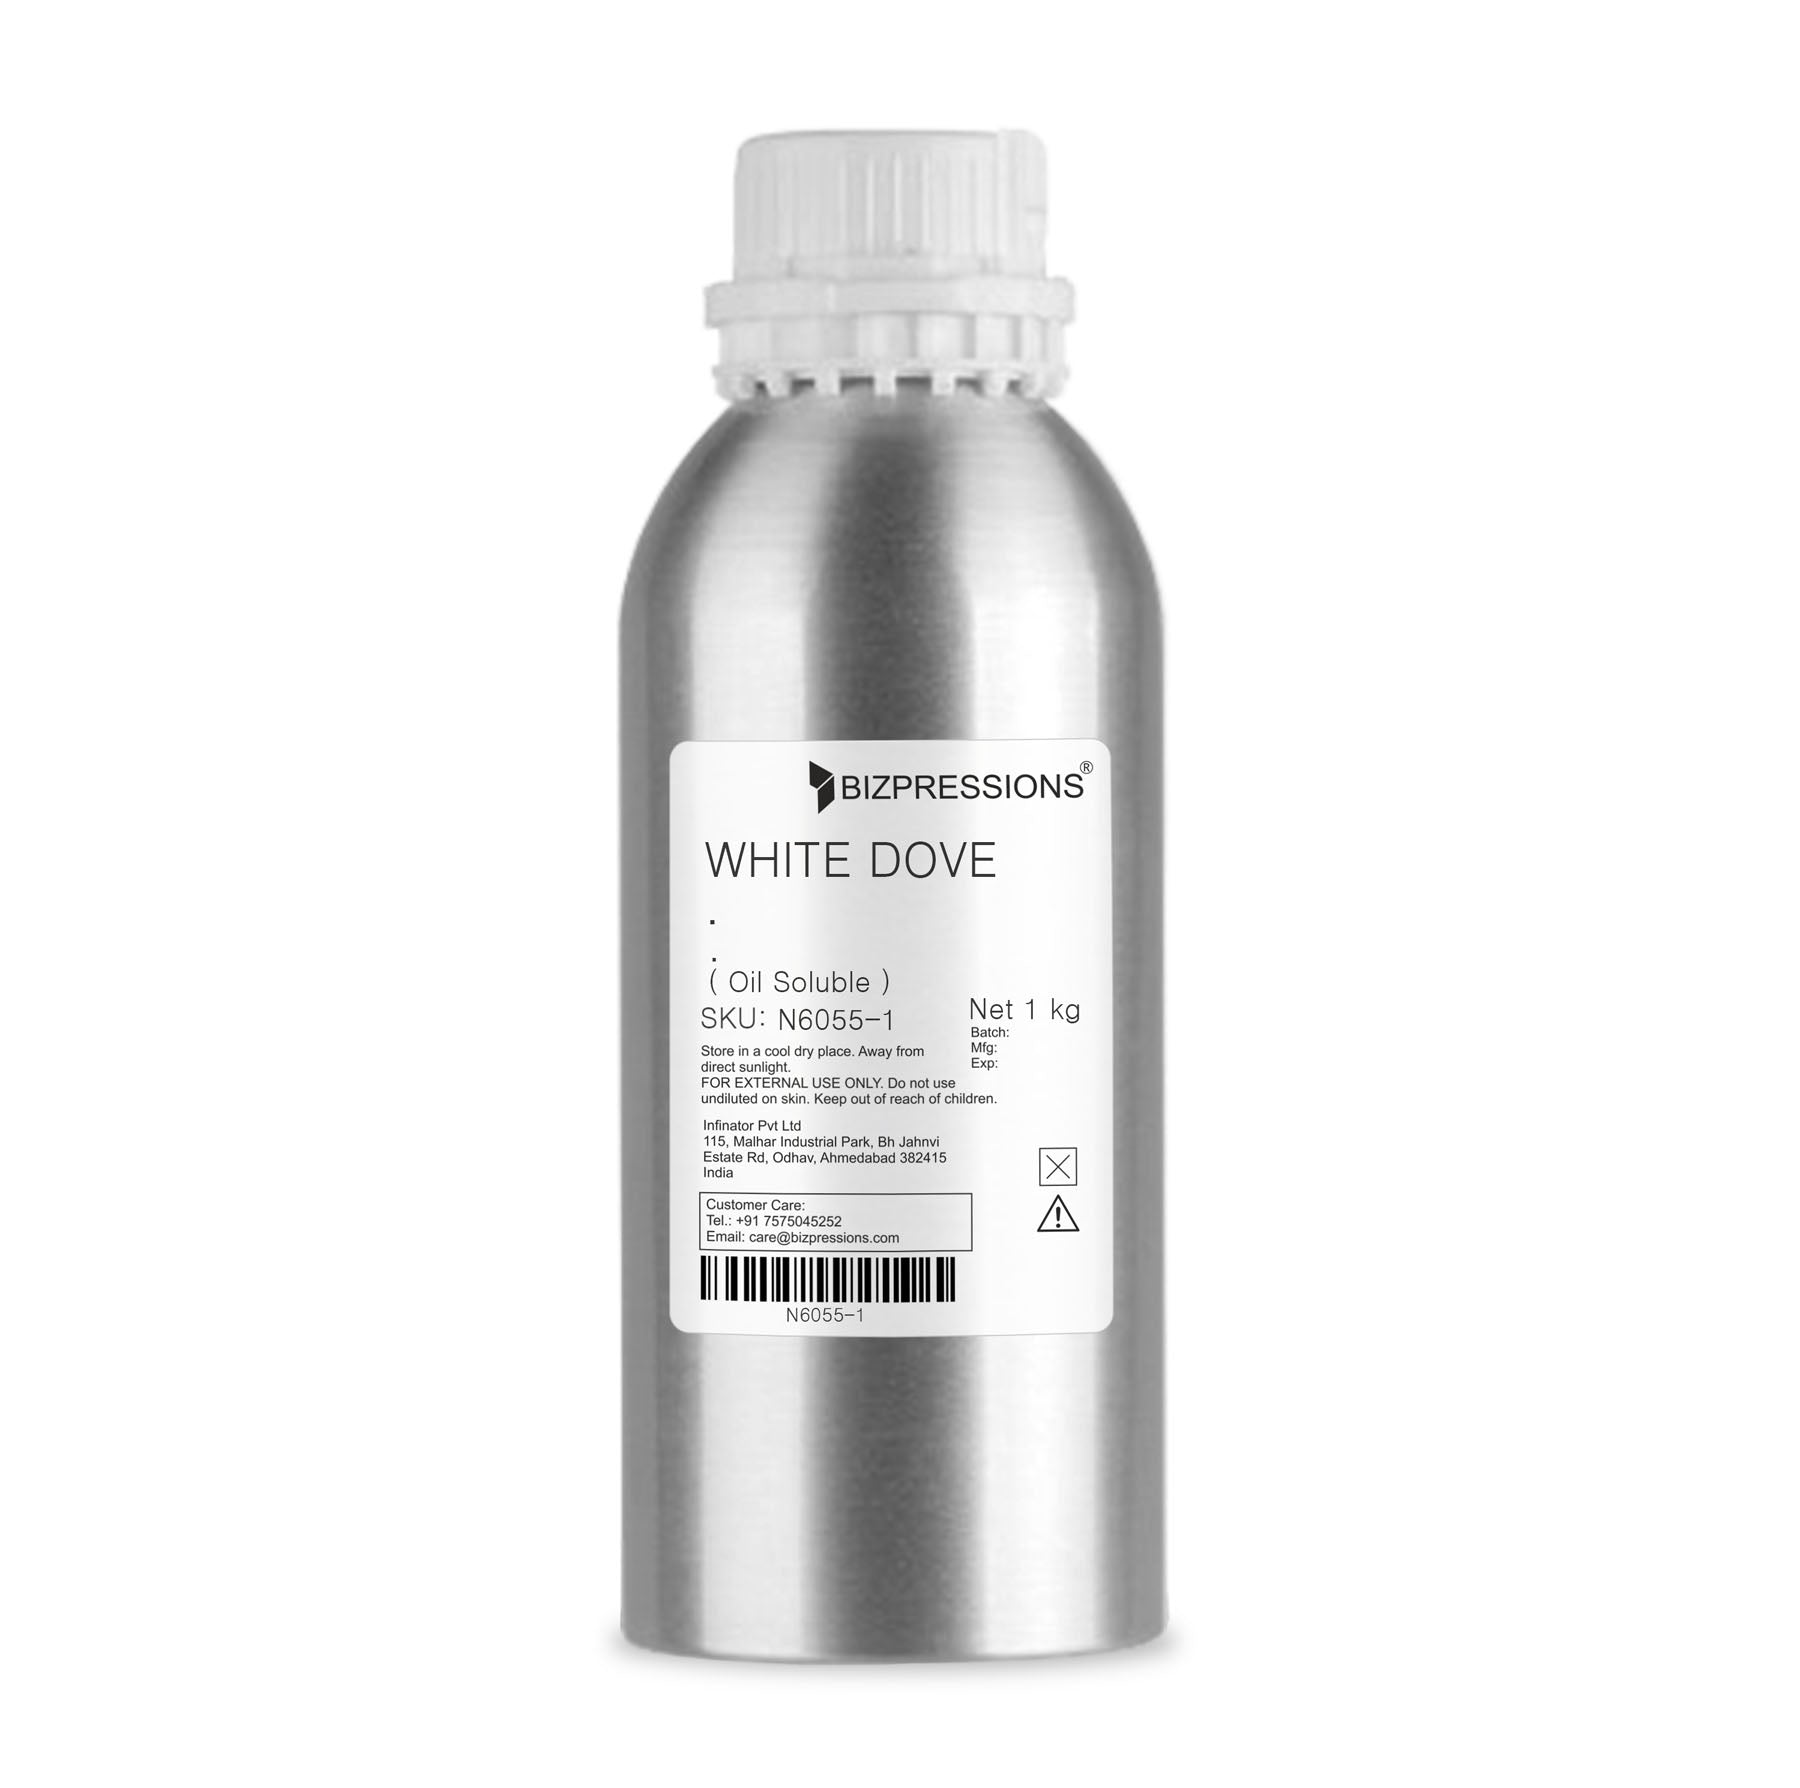 WHITE DOVE - Fragrance ( Oil Soluble ) - 1 kg